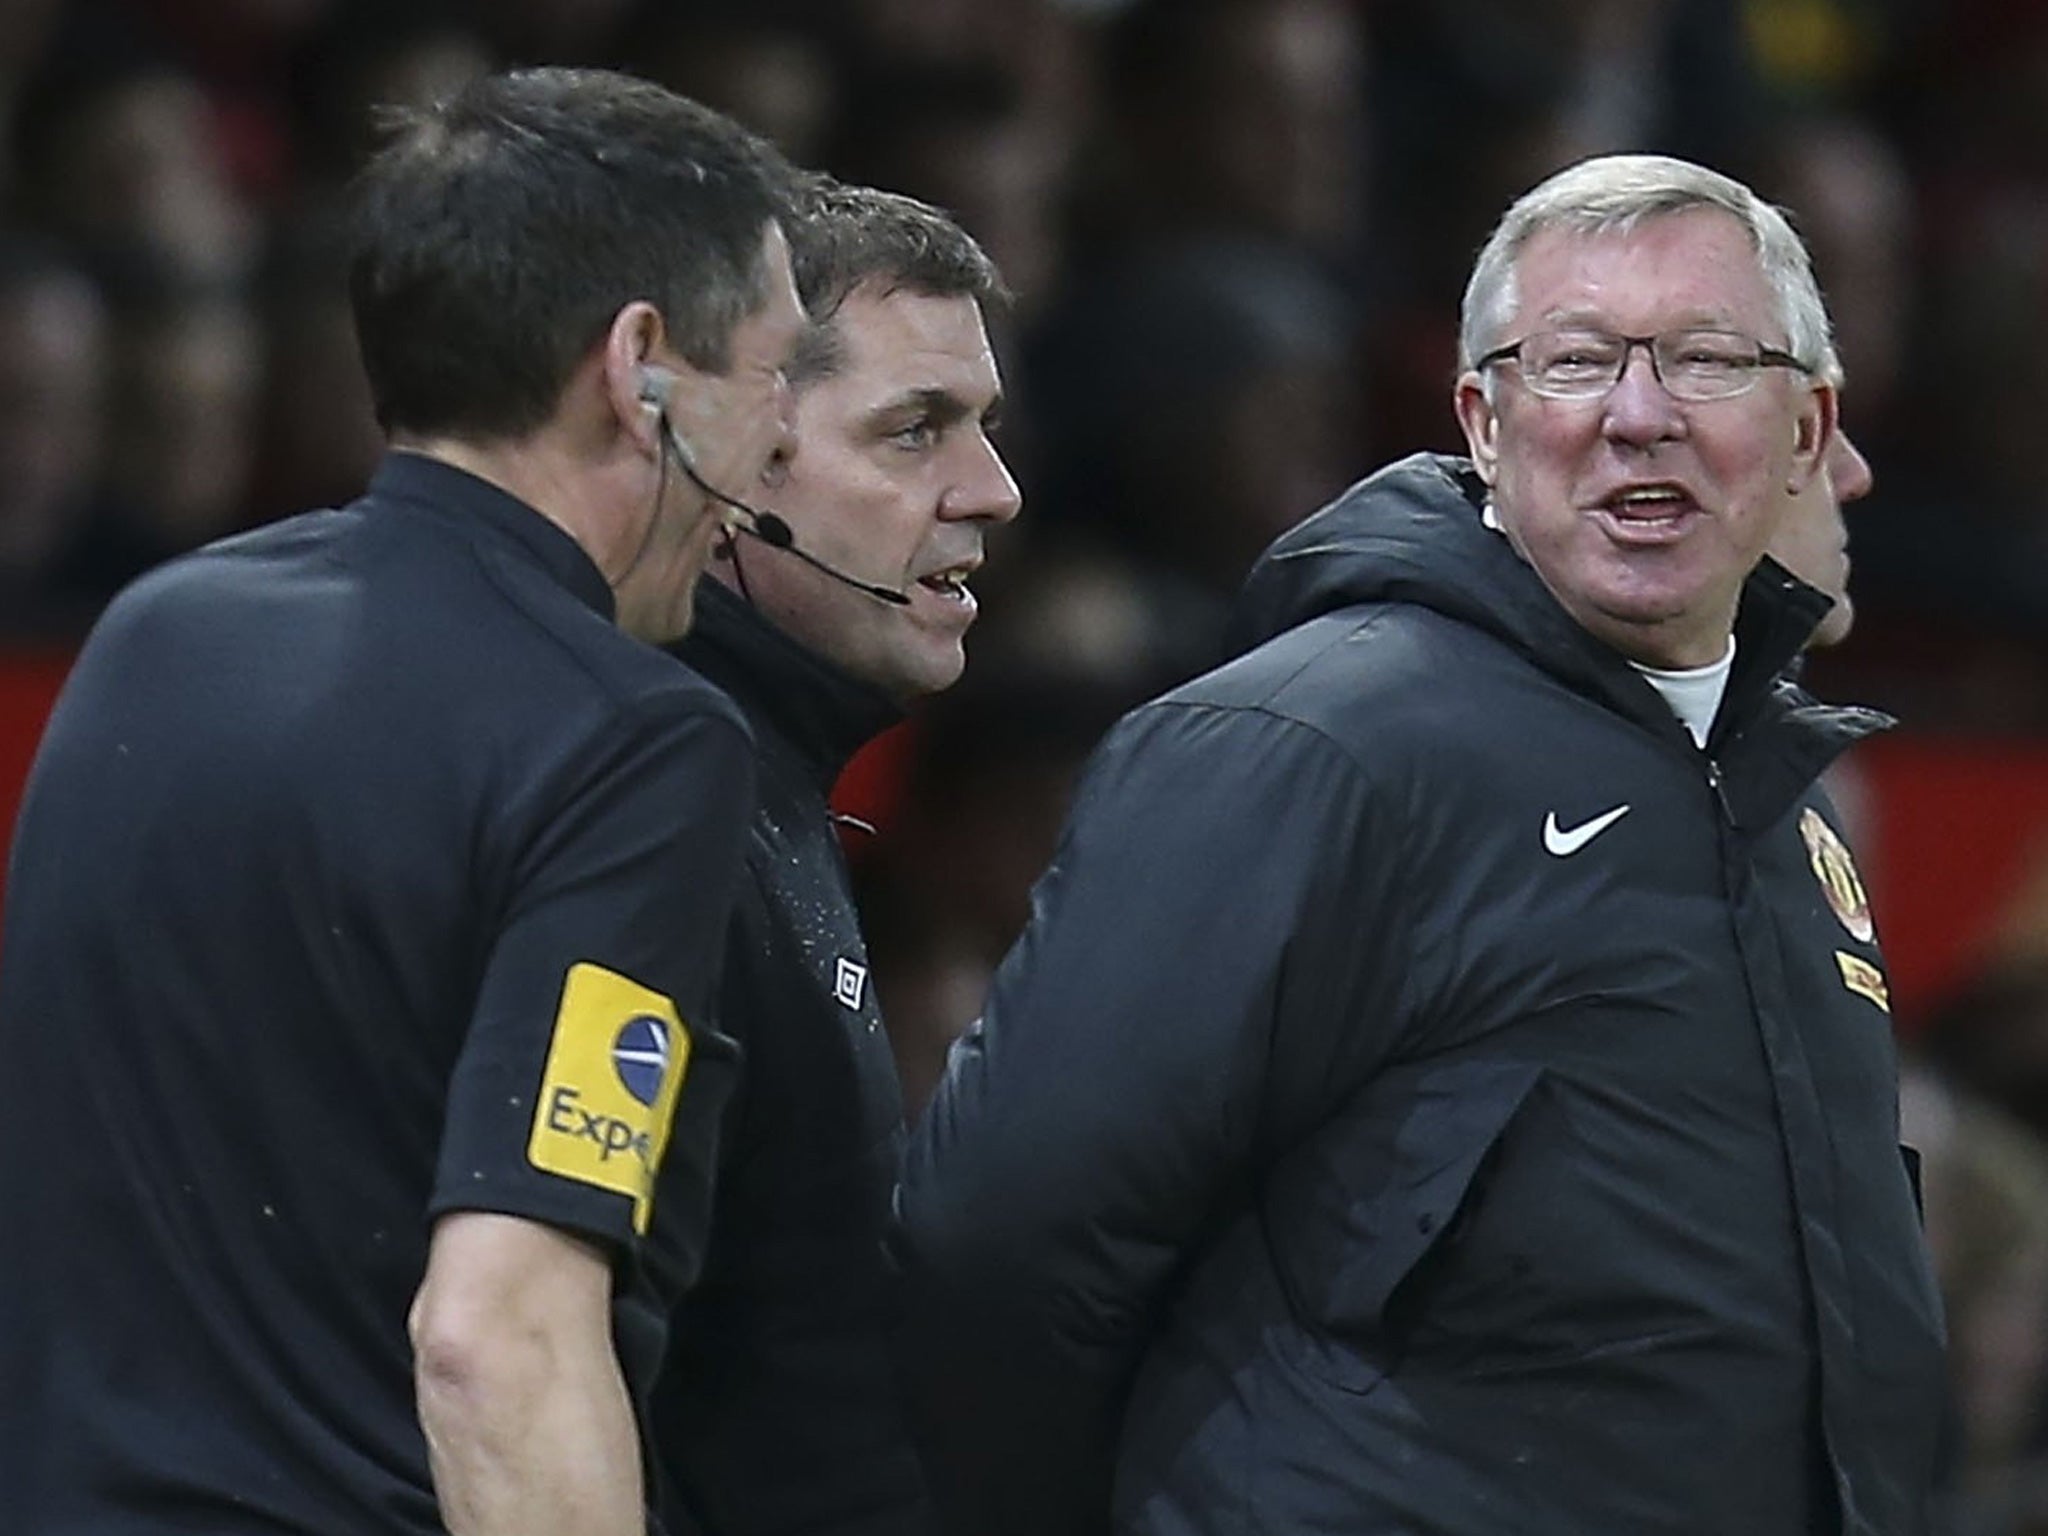 Sir Alex Ferguson shares a joke with assistant referee